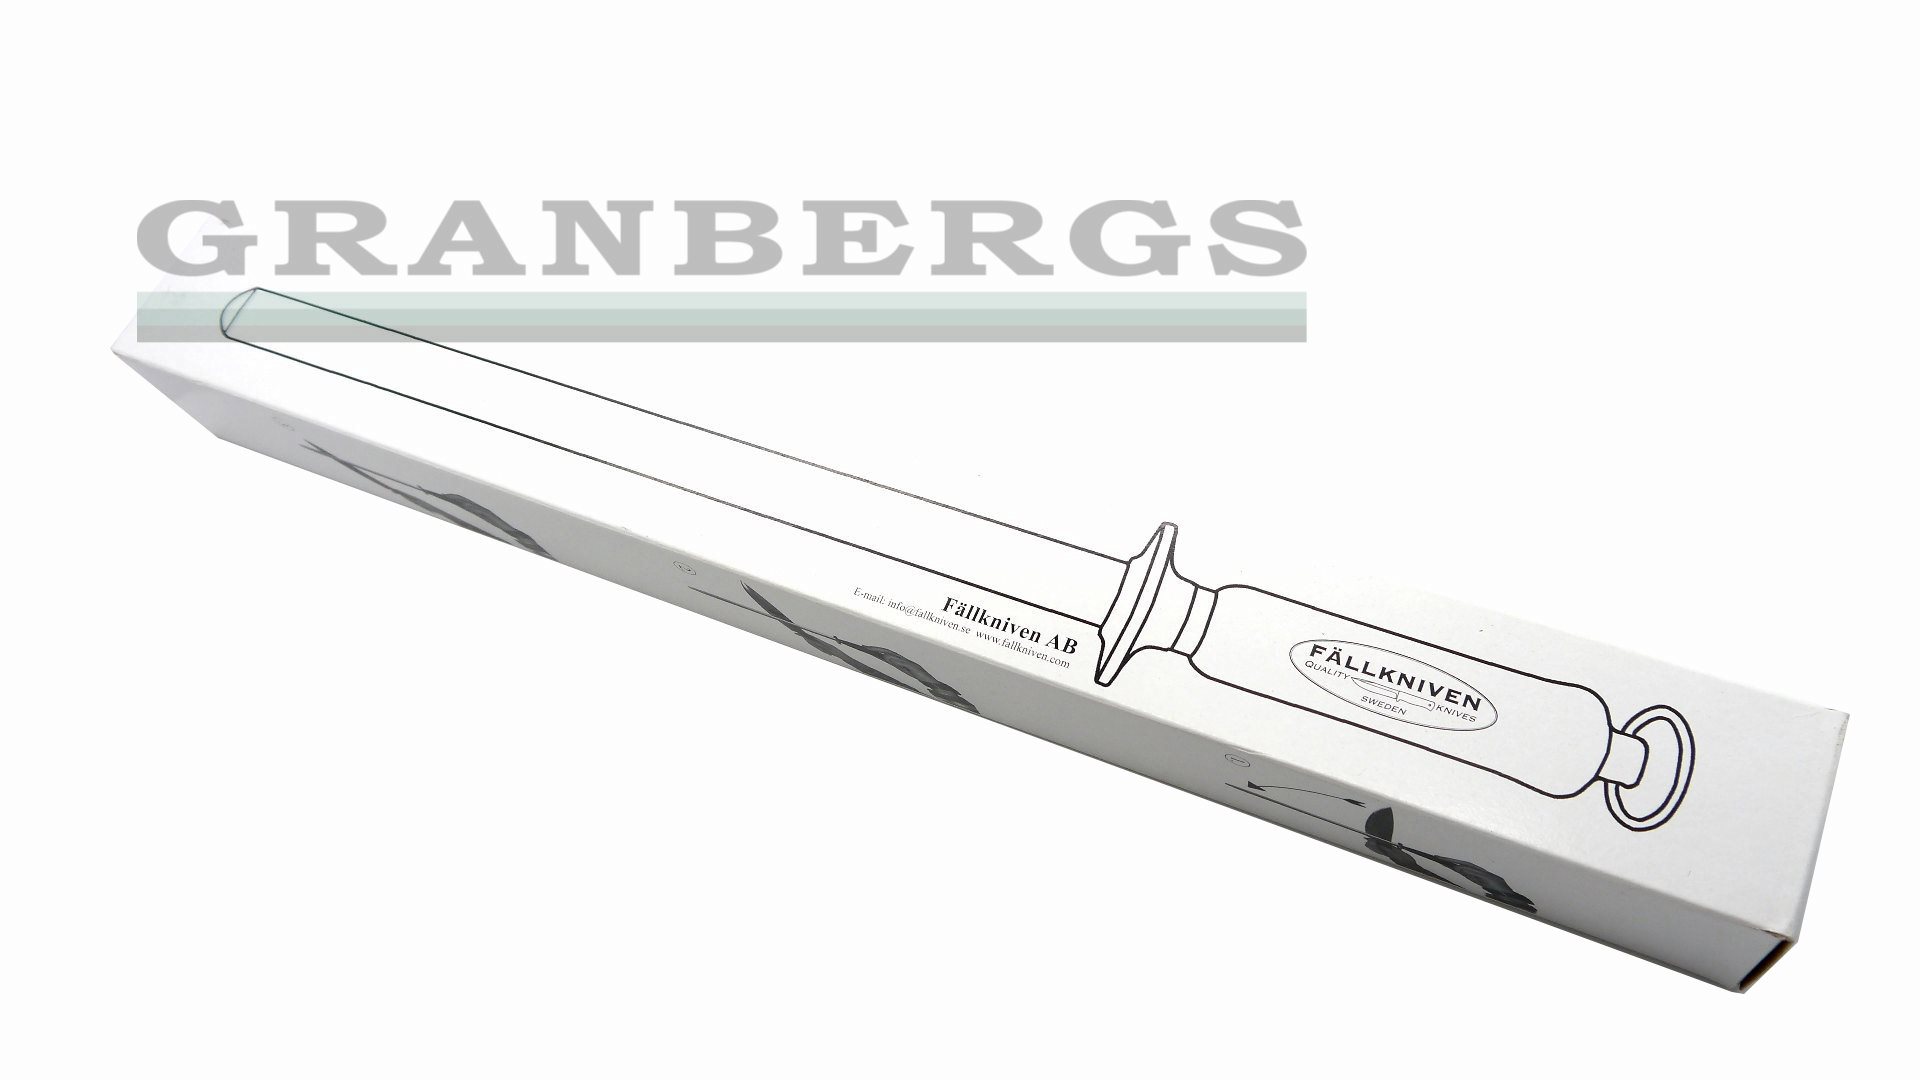 https://granbergs.com.au/getattachment/Products/Knives-Outdoors/Fallkniven-C10-Ceramic-File-Sharpener/5P1120369Fallkniven-C10-Sharpener-1920p-WatermarkFallkniven-C10-Sharpener-1920p-Watermark.jpg.aspx